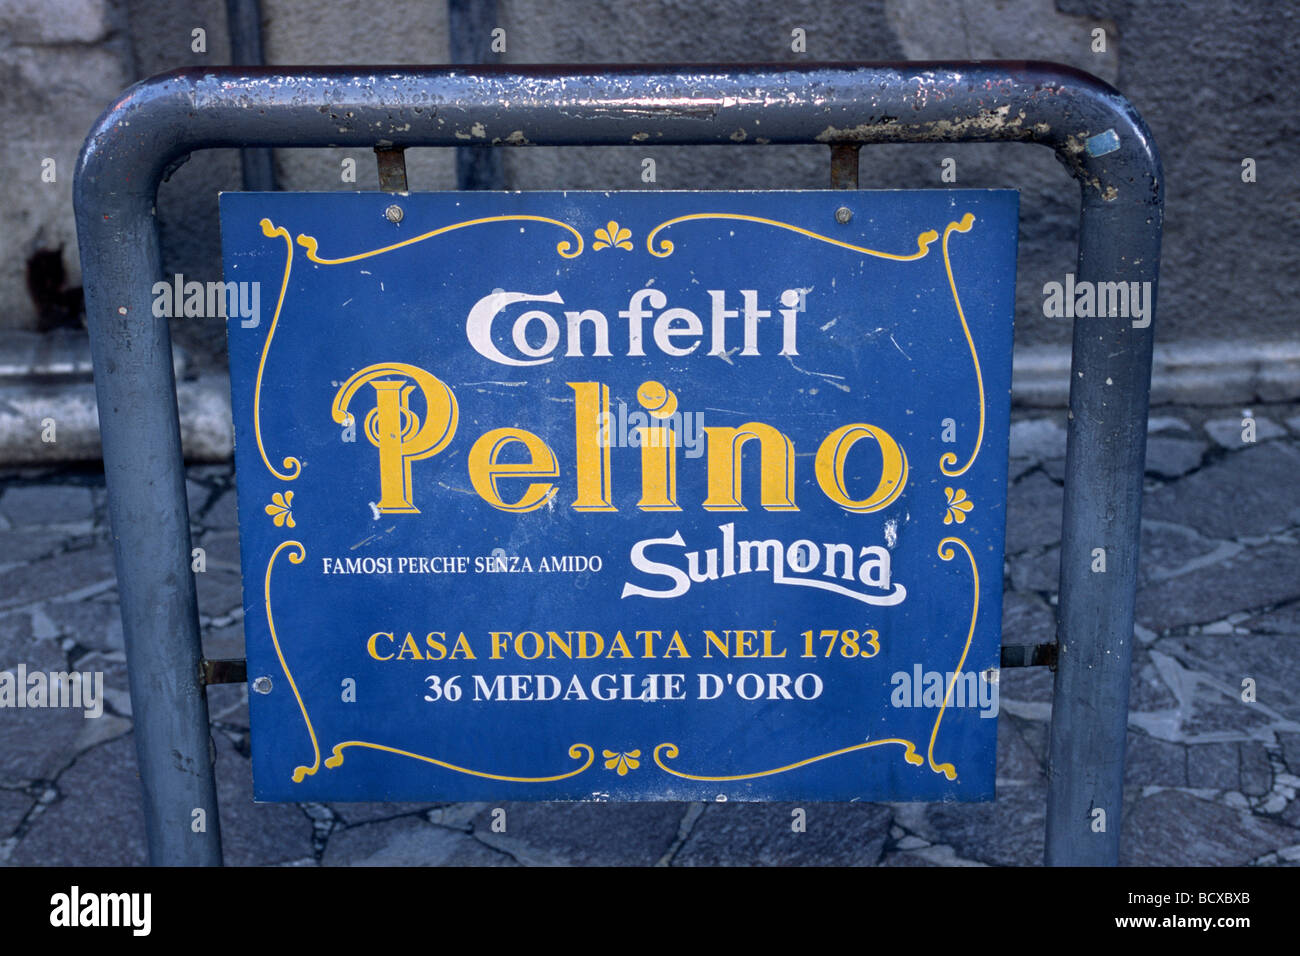 italy, abruzzo, sulmona, confetti pelino advertising Stock Photo - Alamy